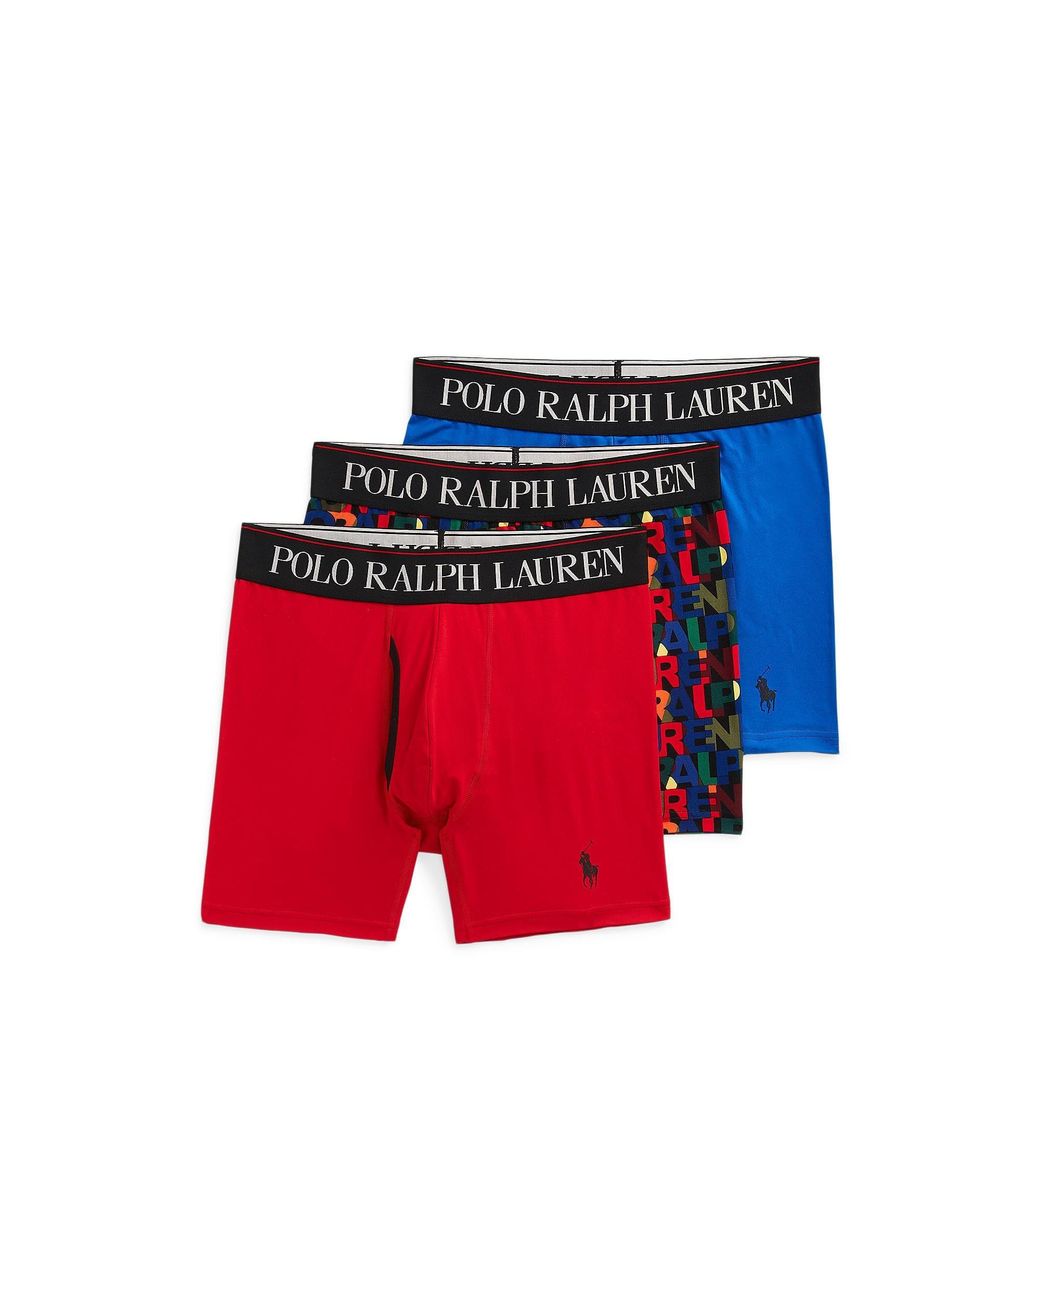 Ralph Lauren Assorted 3-pack Classic Cotton Boxer Briefs - Navy Assorted